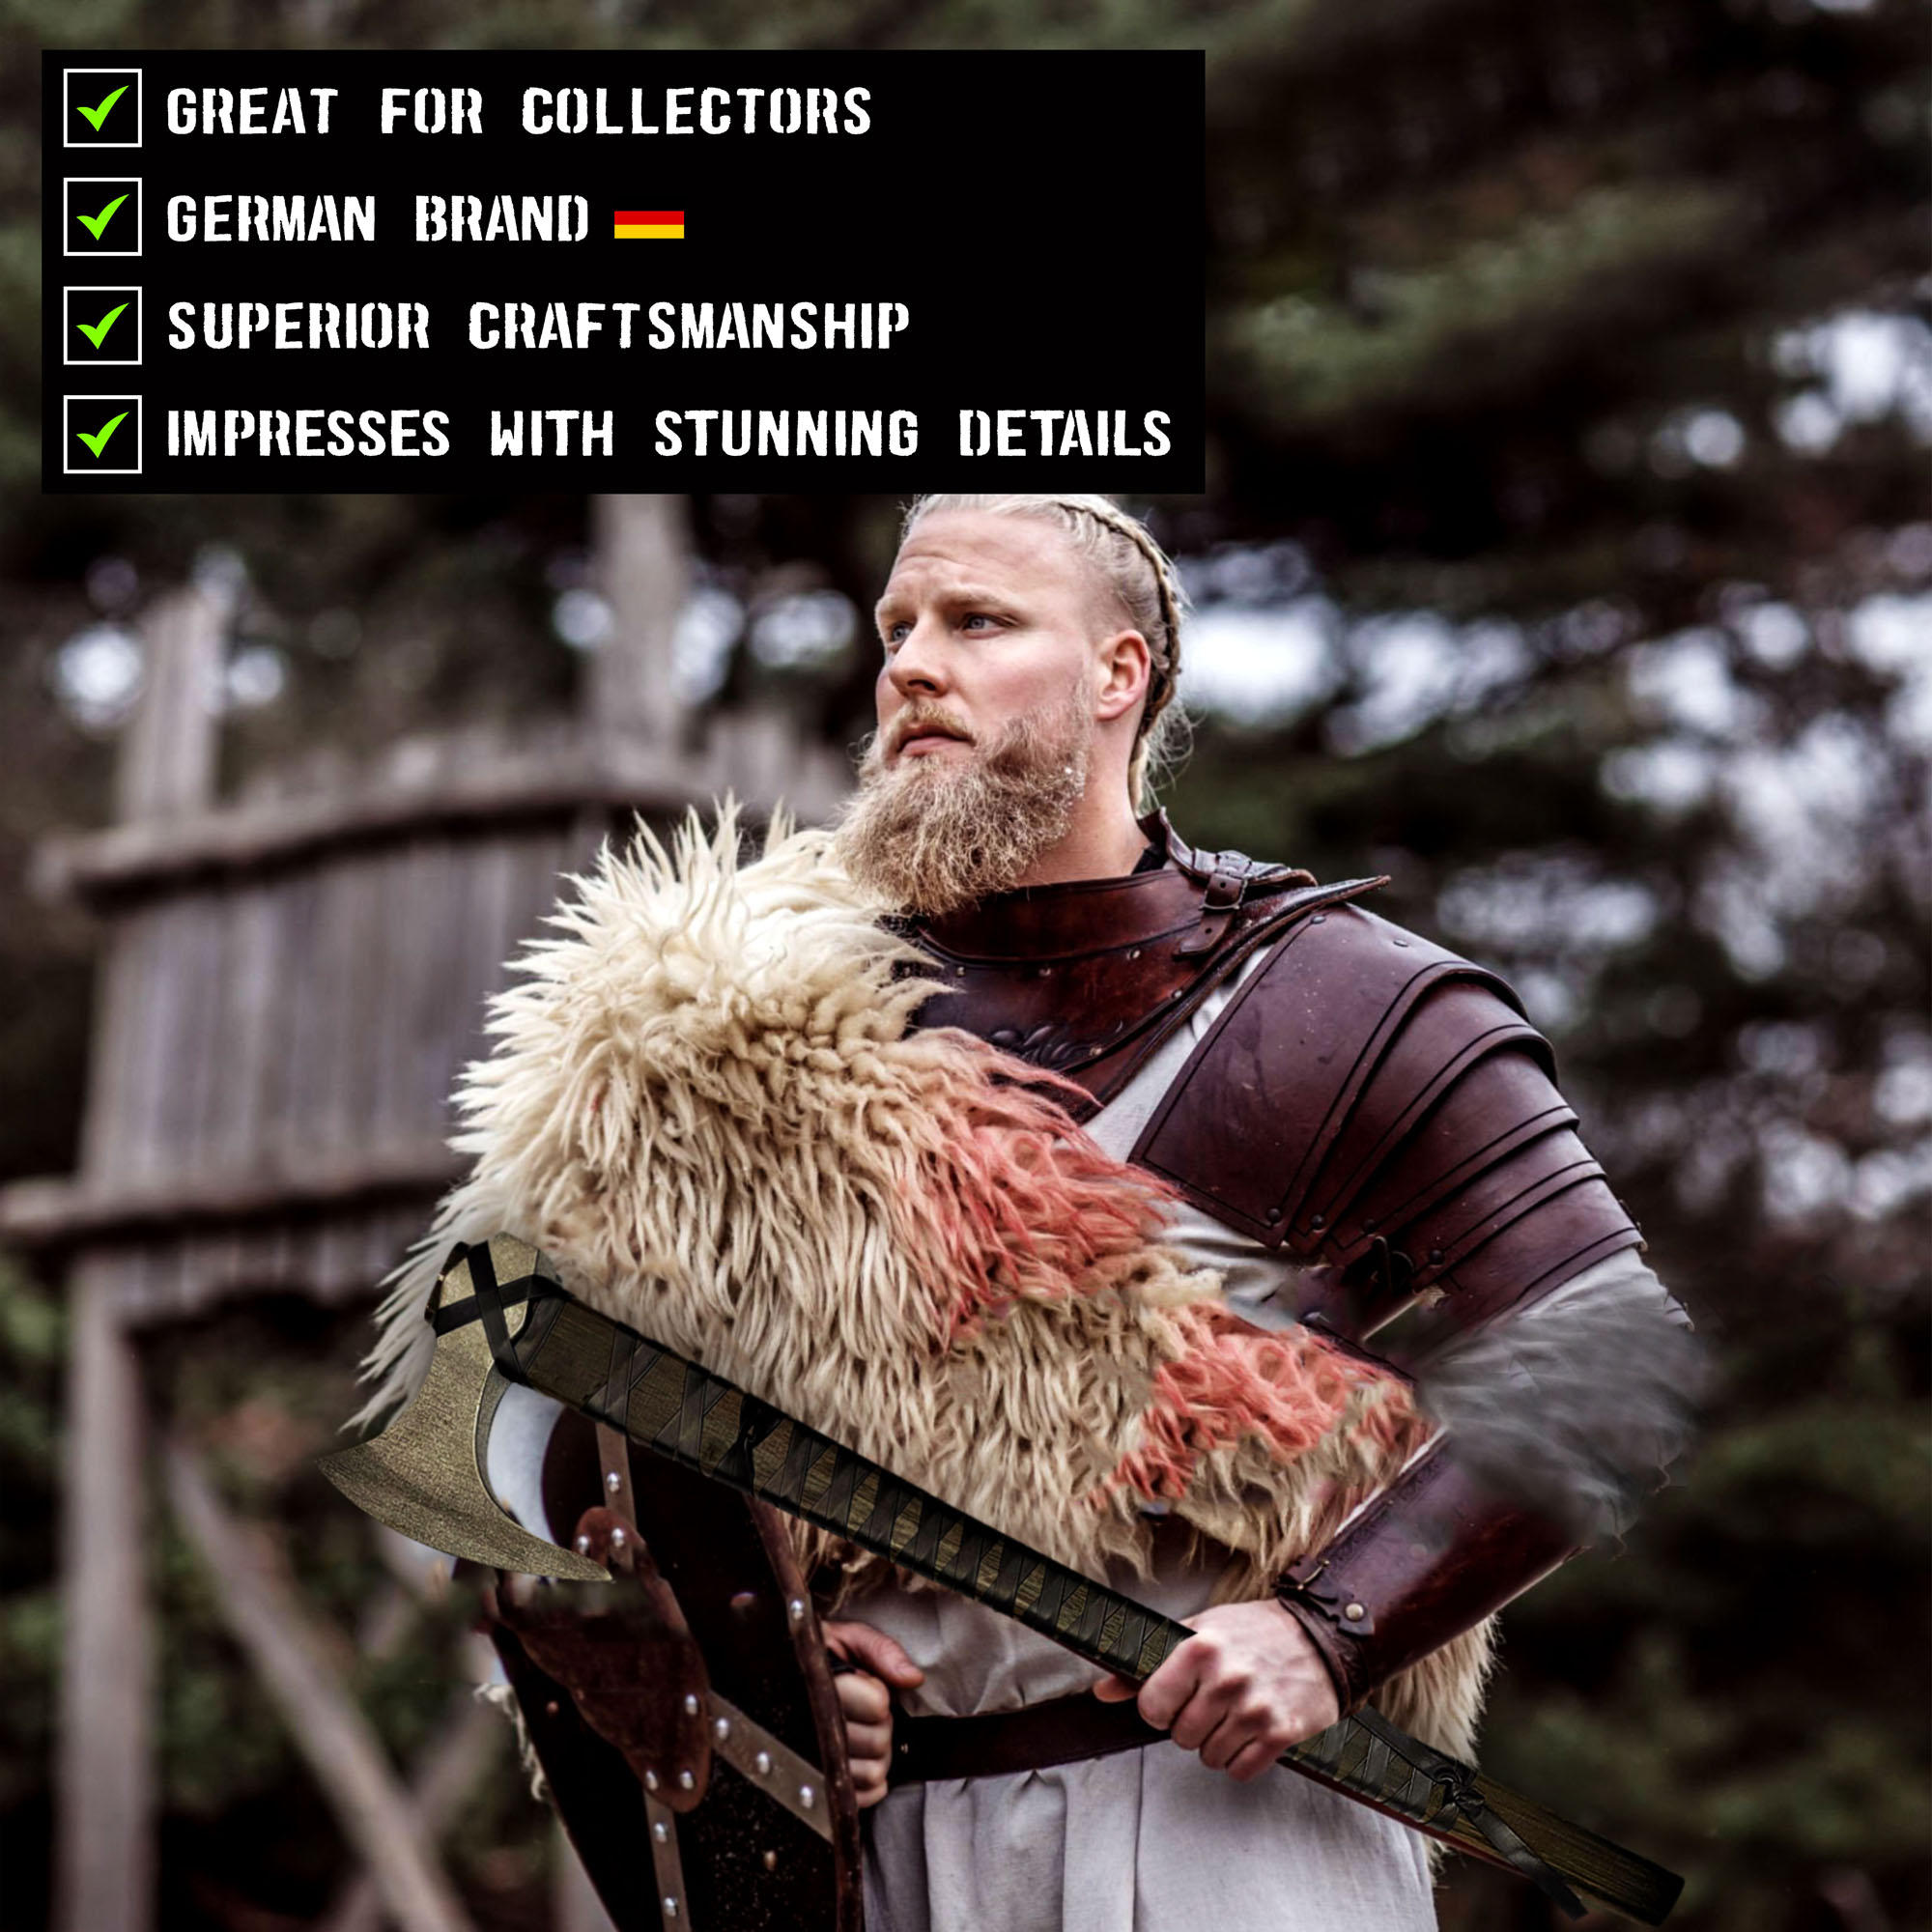 Vikings - Ragnar's Axt mit Wandtafel